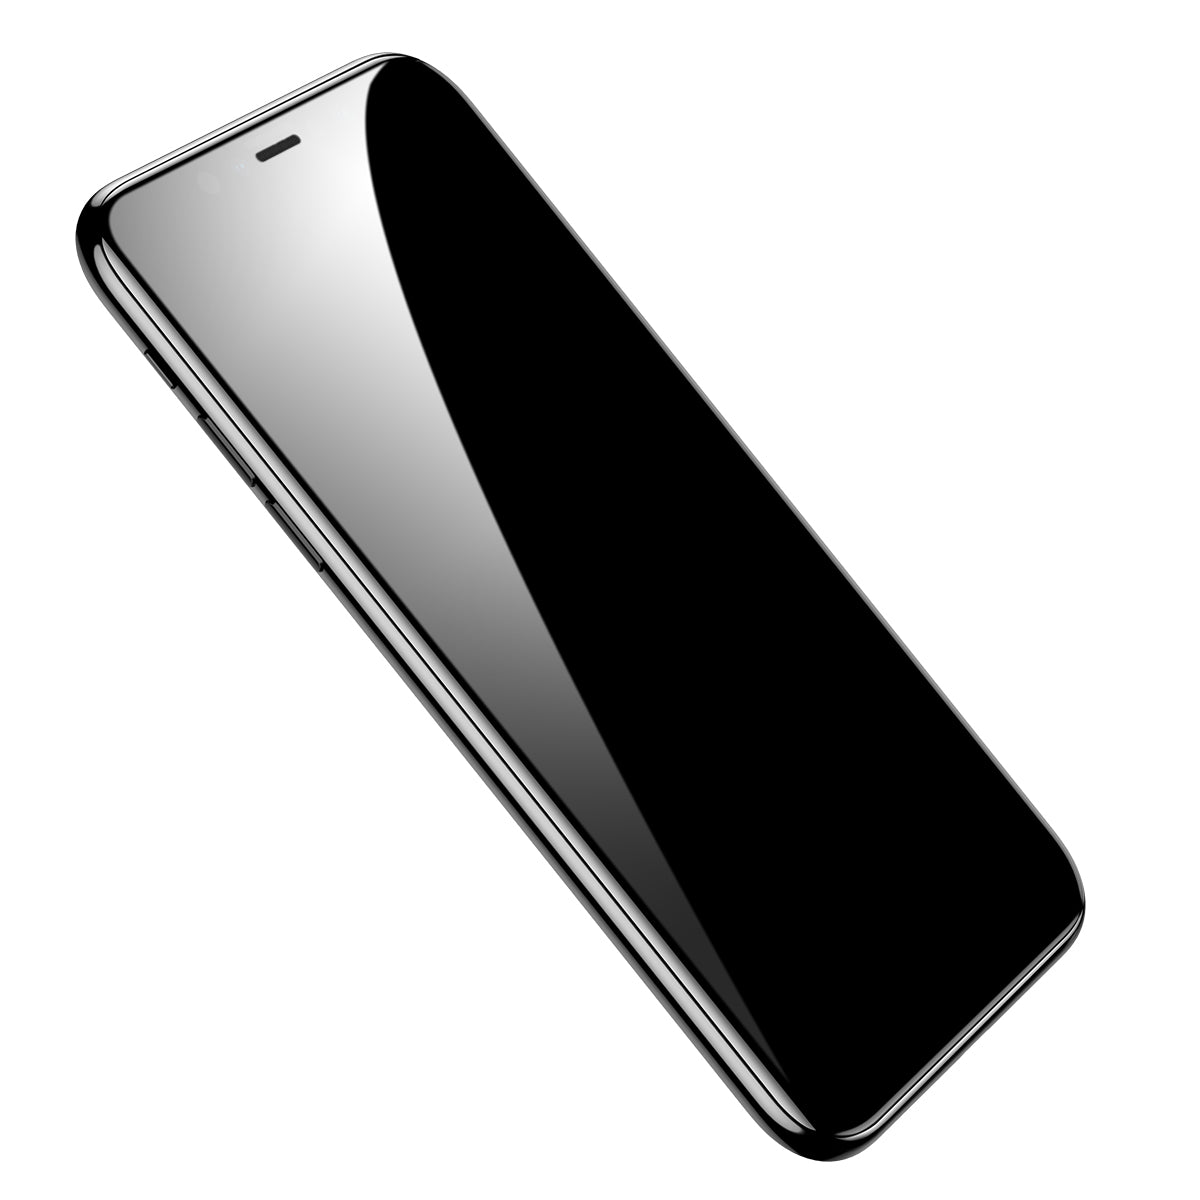 Baseus iPhone 11/11 Pro/11 Pro Max Full Screen Glass Screen Protector 2 Pcs Set 0.3mm HD Clear Anti Fingerprint 9H Hardness Tempered Glass